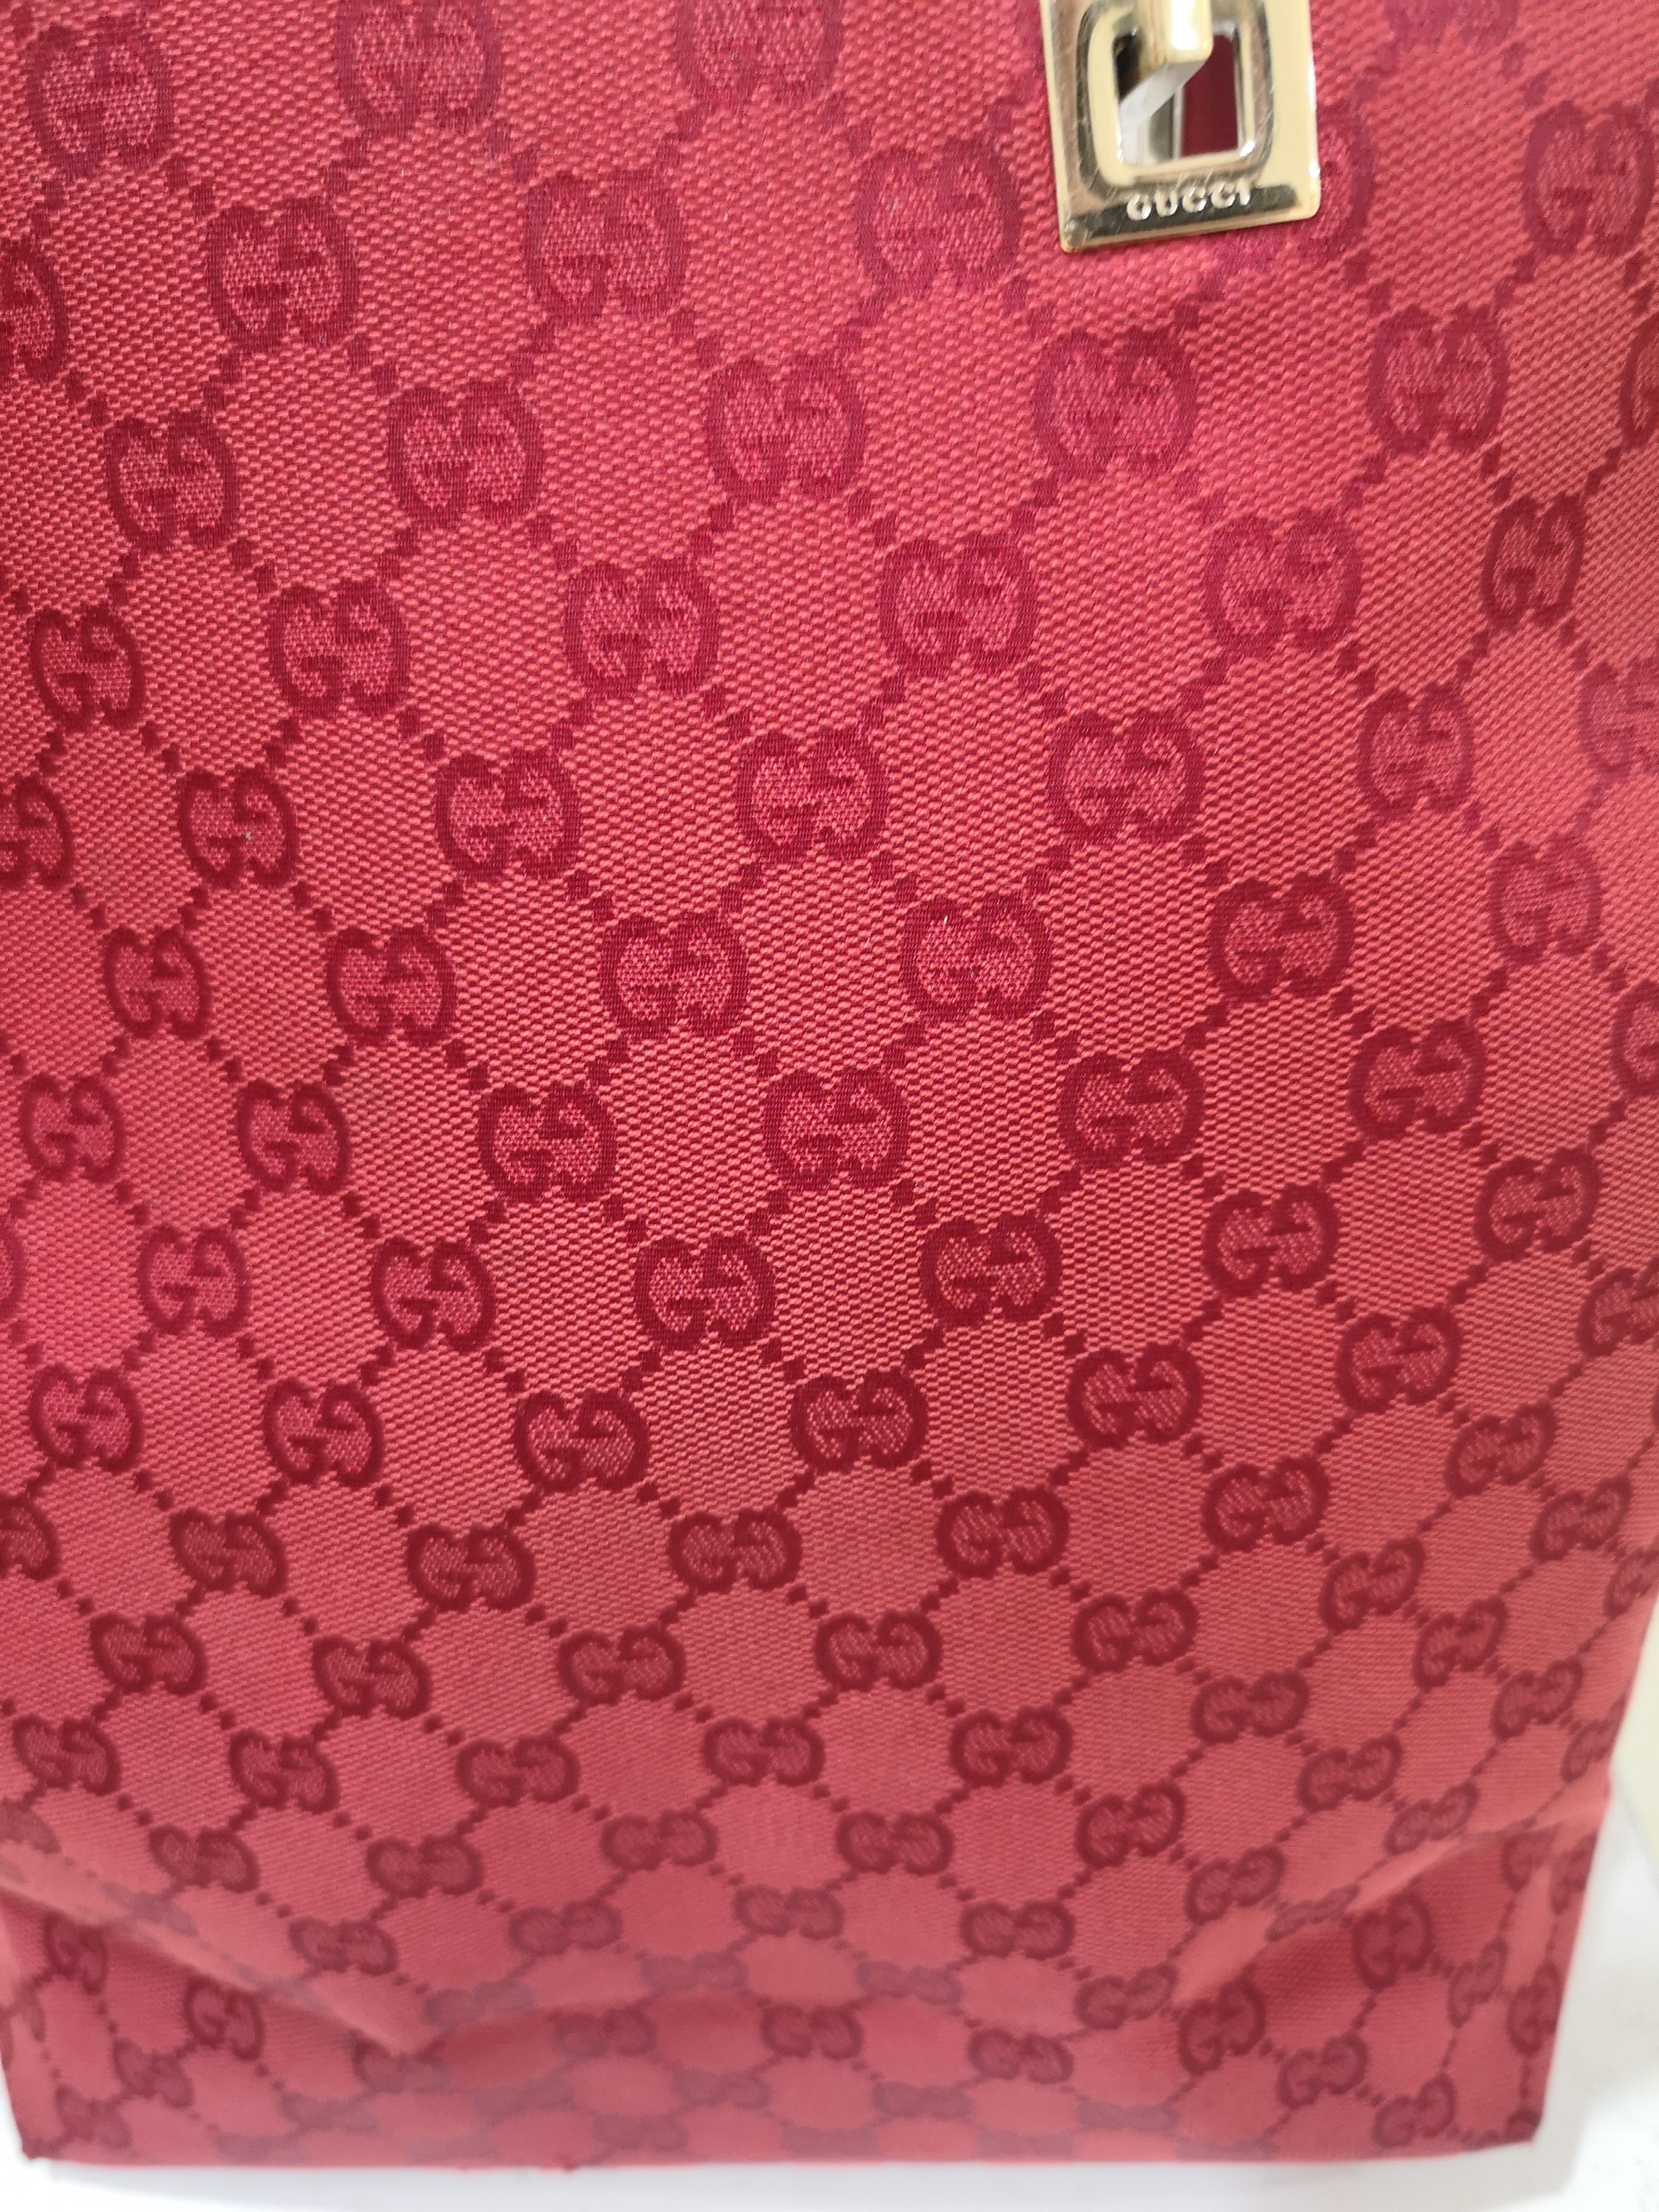 Gucci red Shoulder bag
measurements: h 32 * 36 * 12 cm